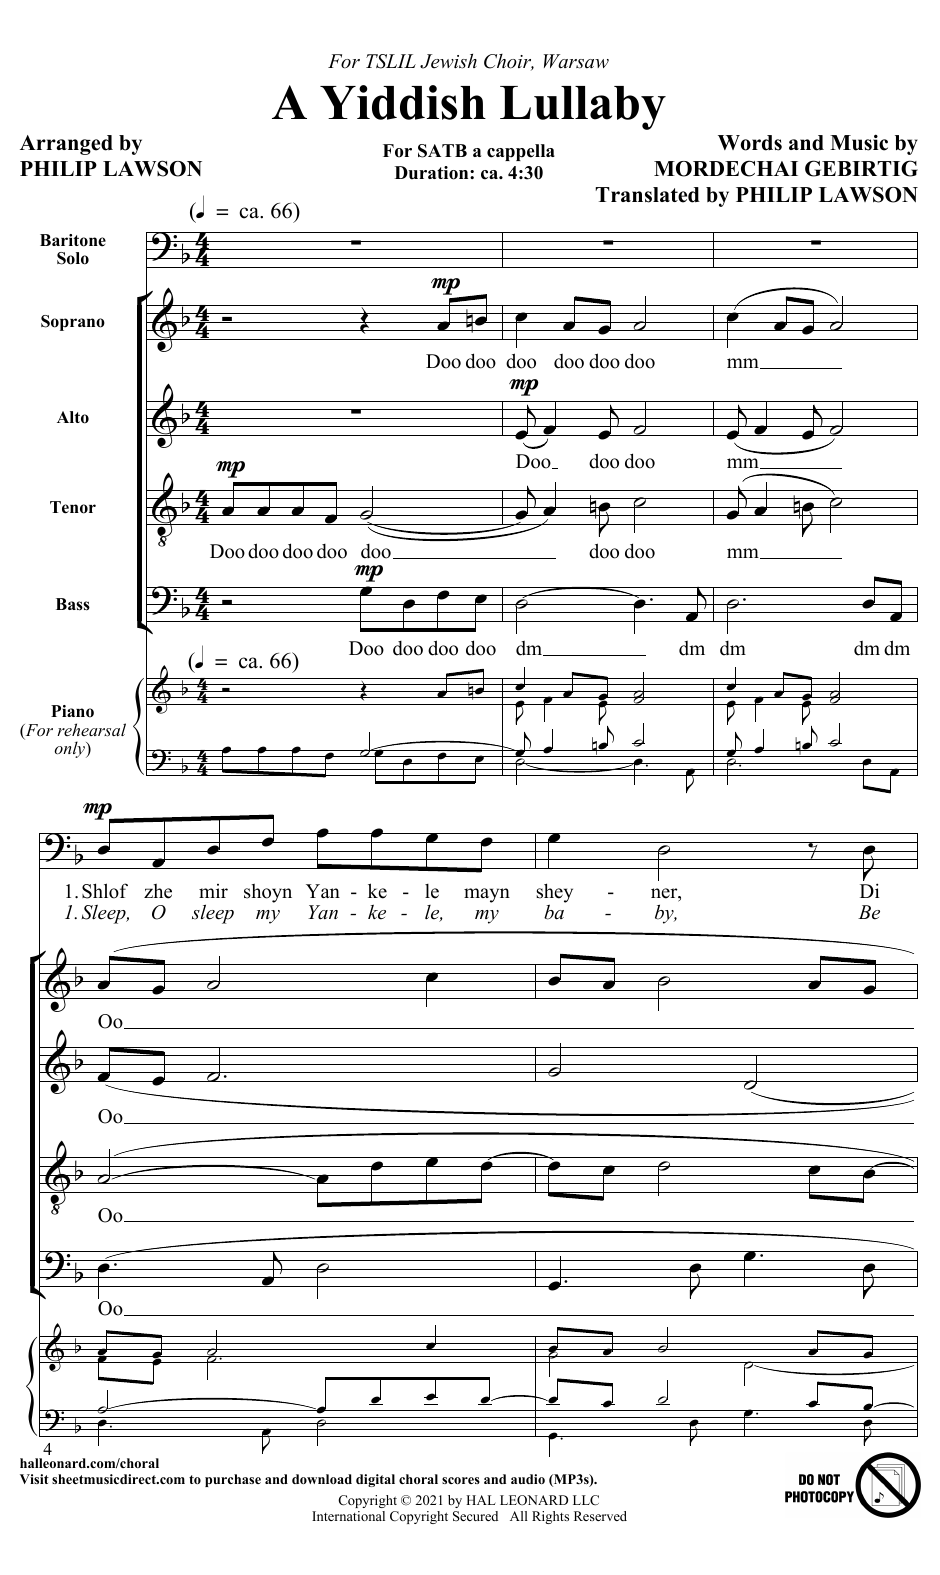 Mordechai Gebirtig A Yiddish Lullaby (arr. Philip Lawson) sheet music notes and chords arranged for SATB Choir